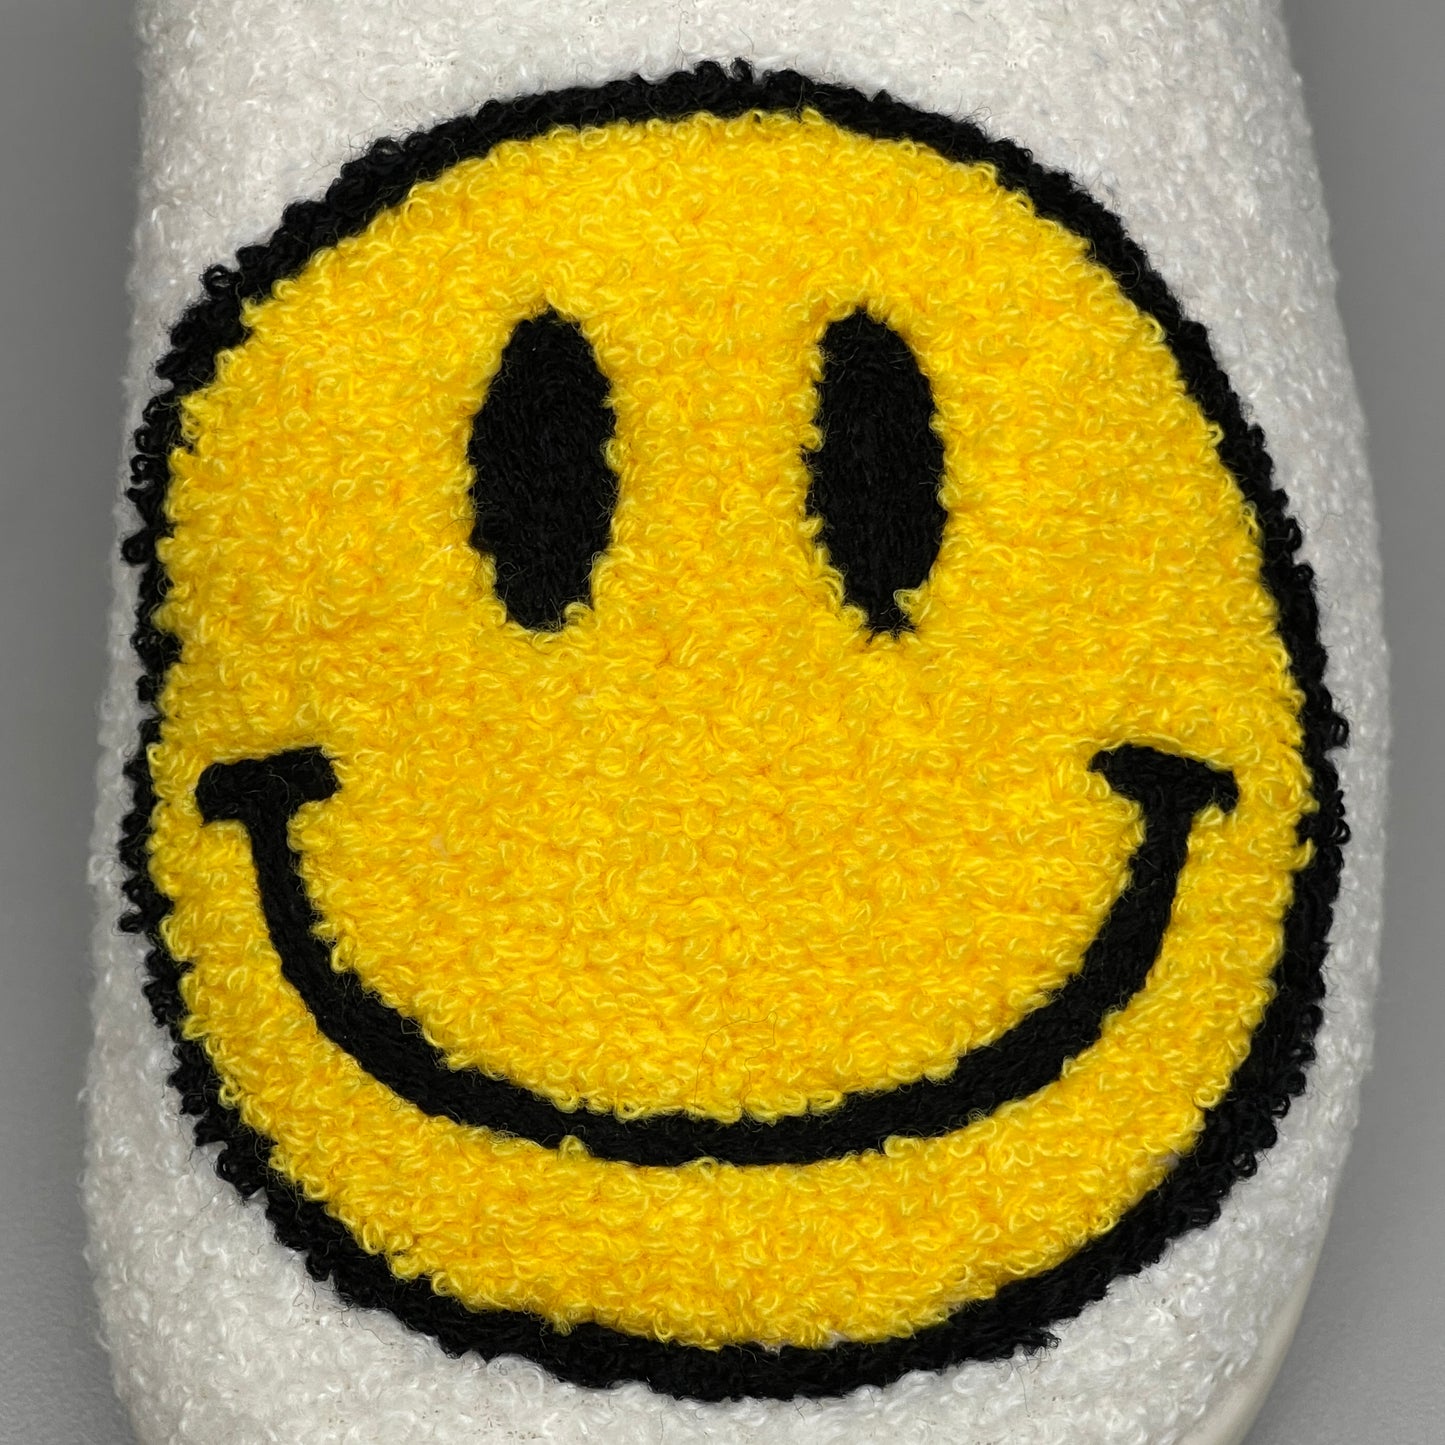 SMILEY FACE Plush Slippers Comfortable Slip On Smile Women's 7 White Yellow (New)